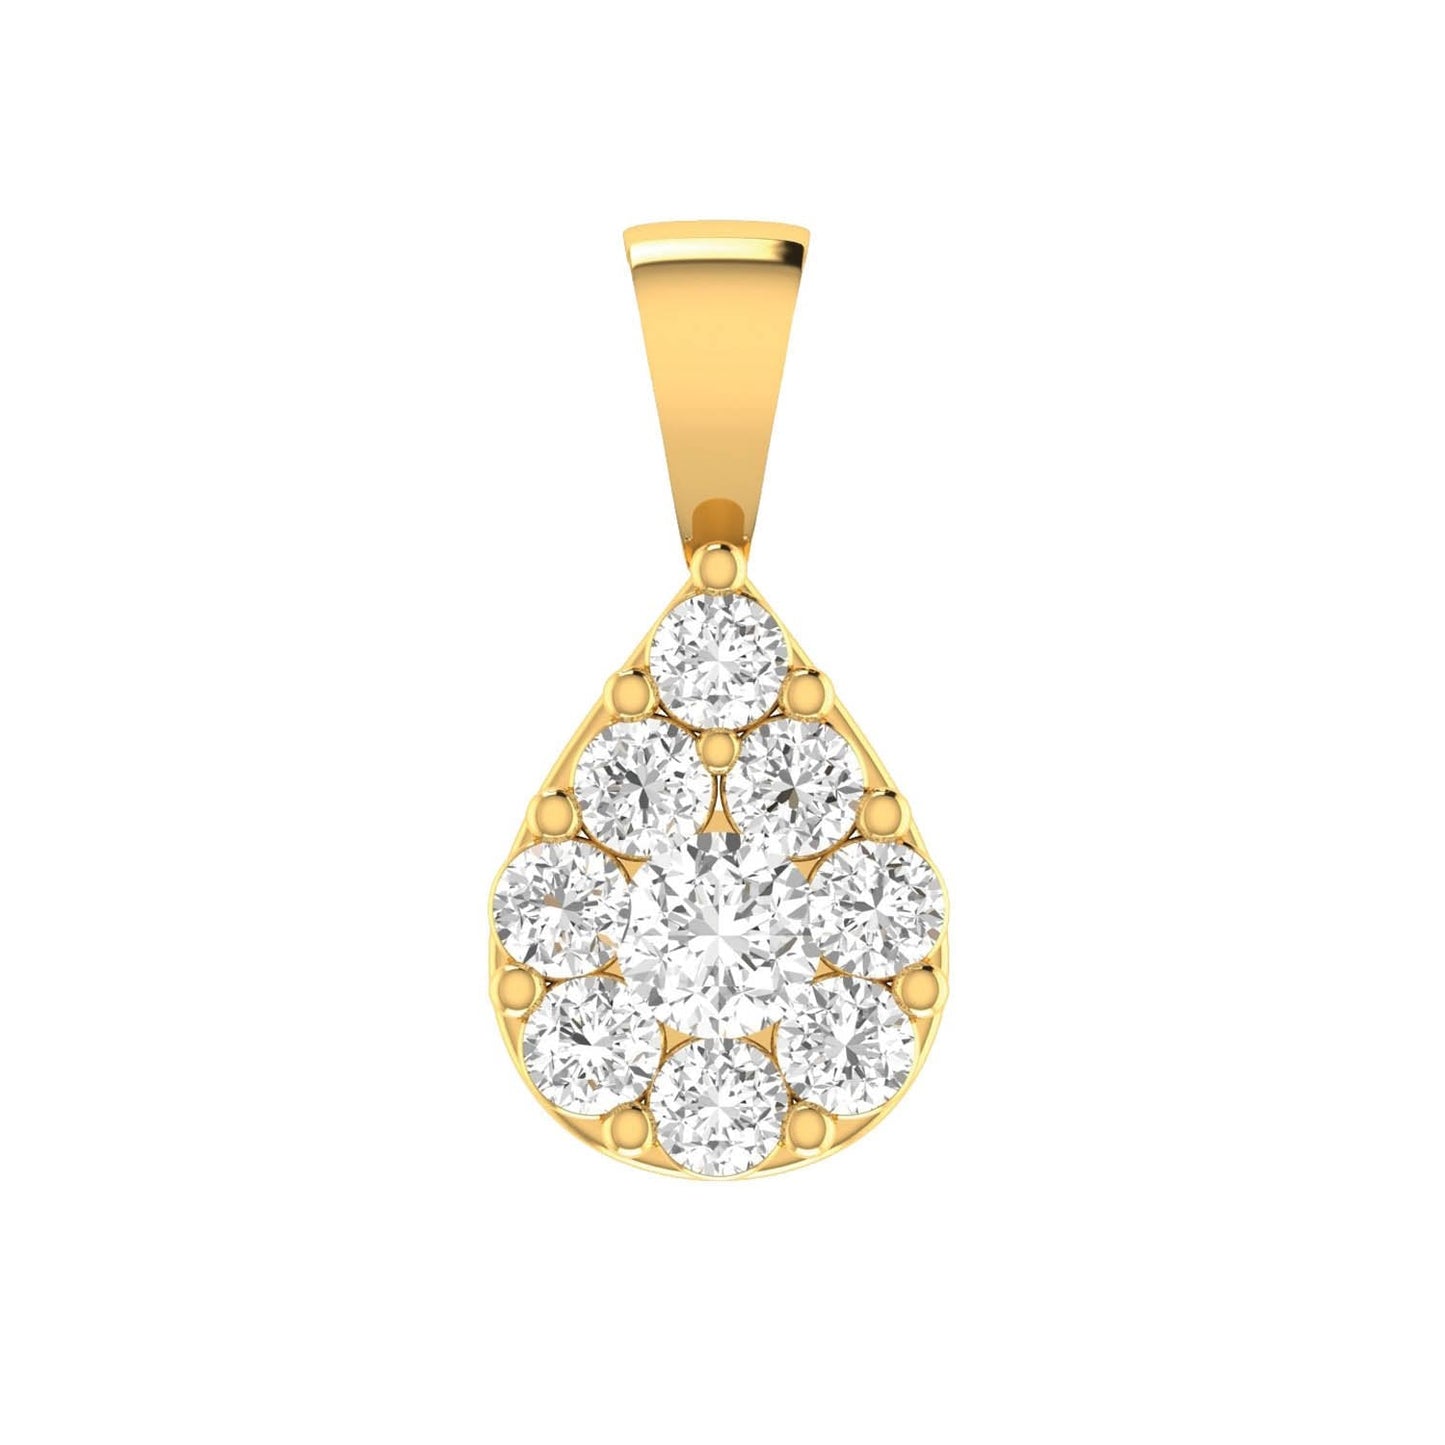 Teardrop Diamond Pendant with 1.00ct Diamonds in 9K Yellow Gold - 9YTDP100GH